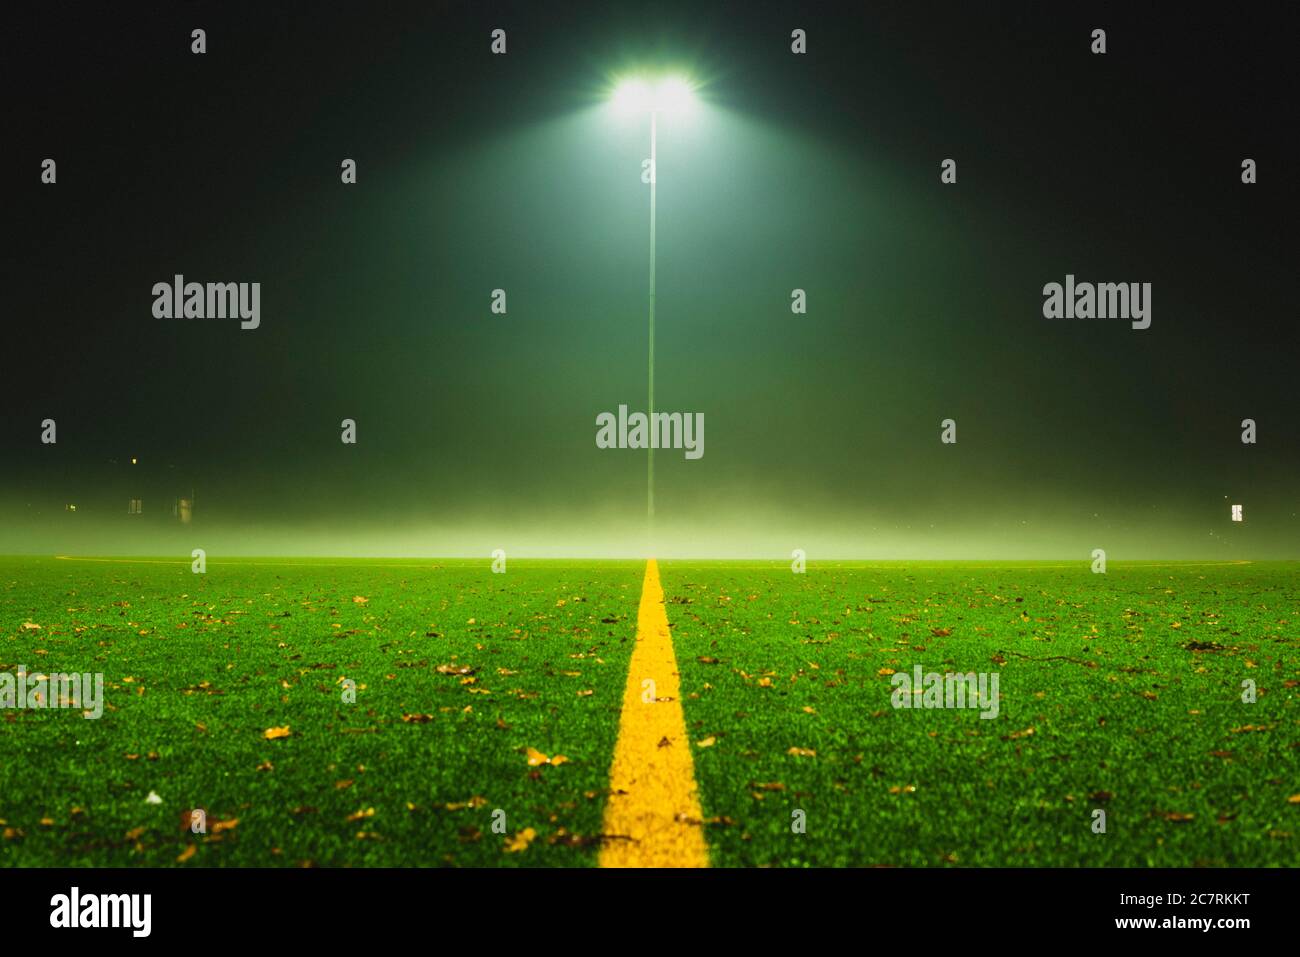 Foggy Footballfield, Soccer, football field at night with fog, lantern and fog Stock Photo